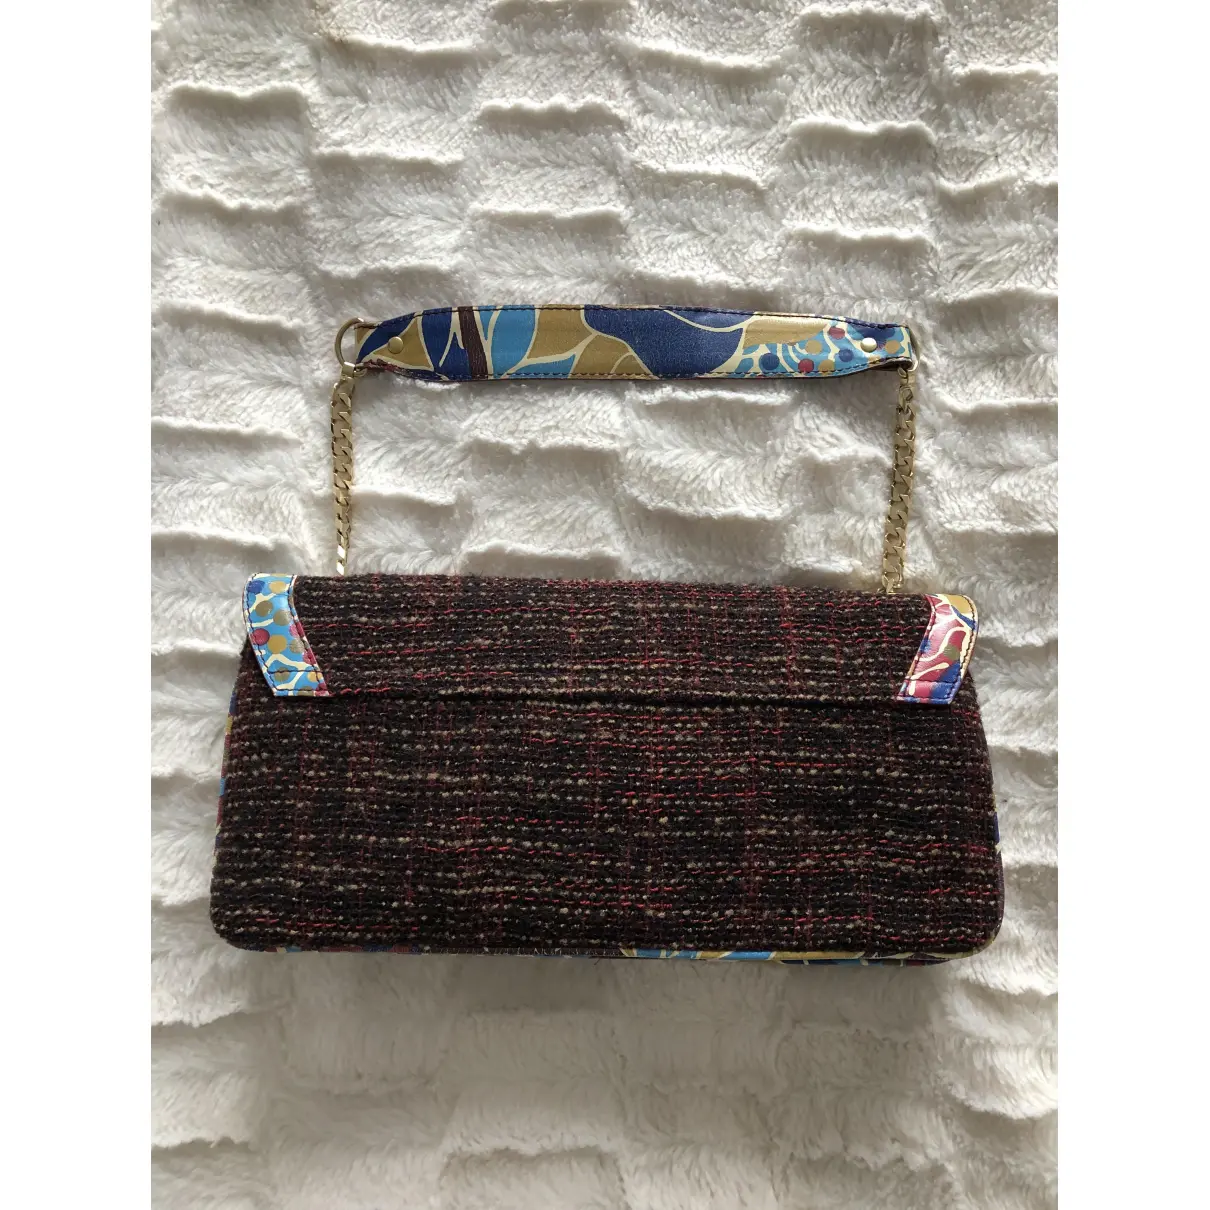 Buy Dolce & Gabbana Tweed handbag online